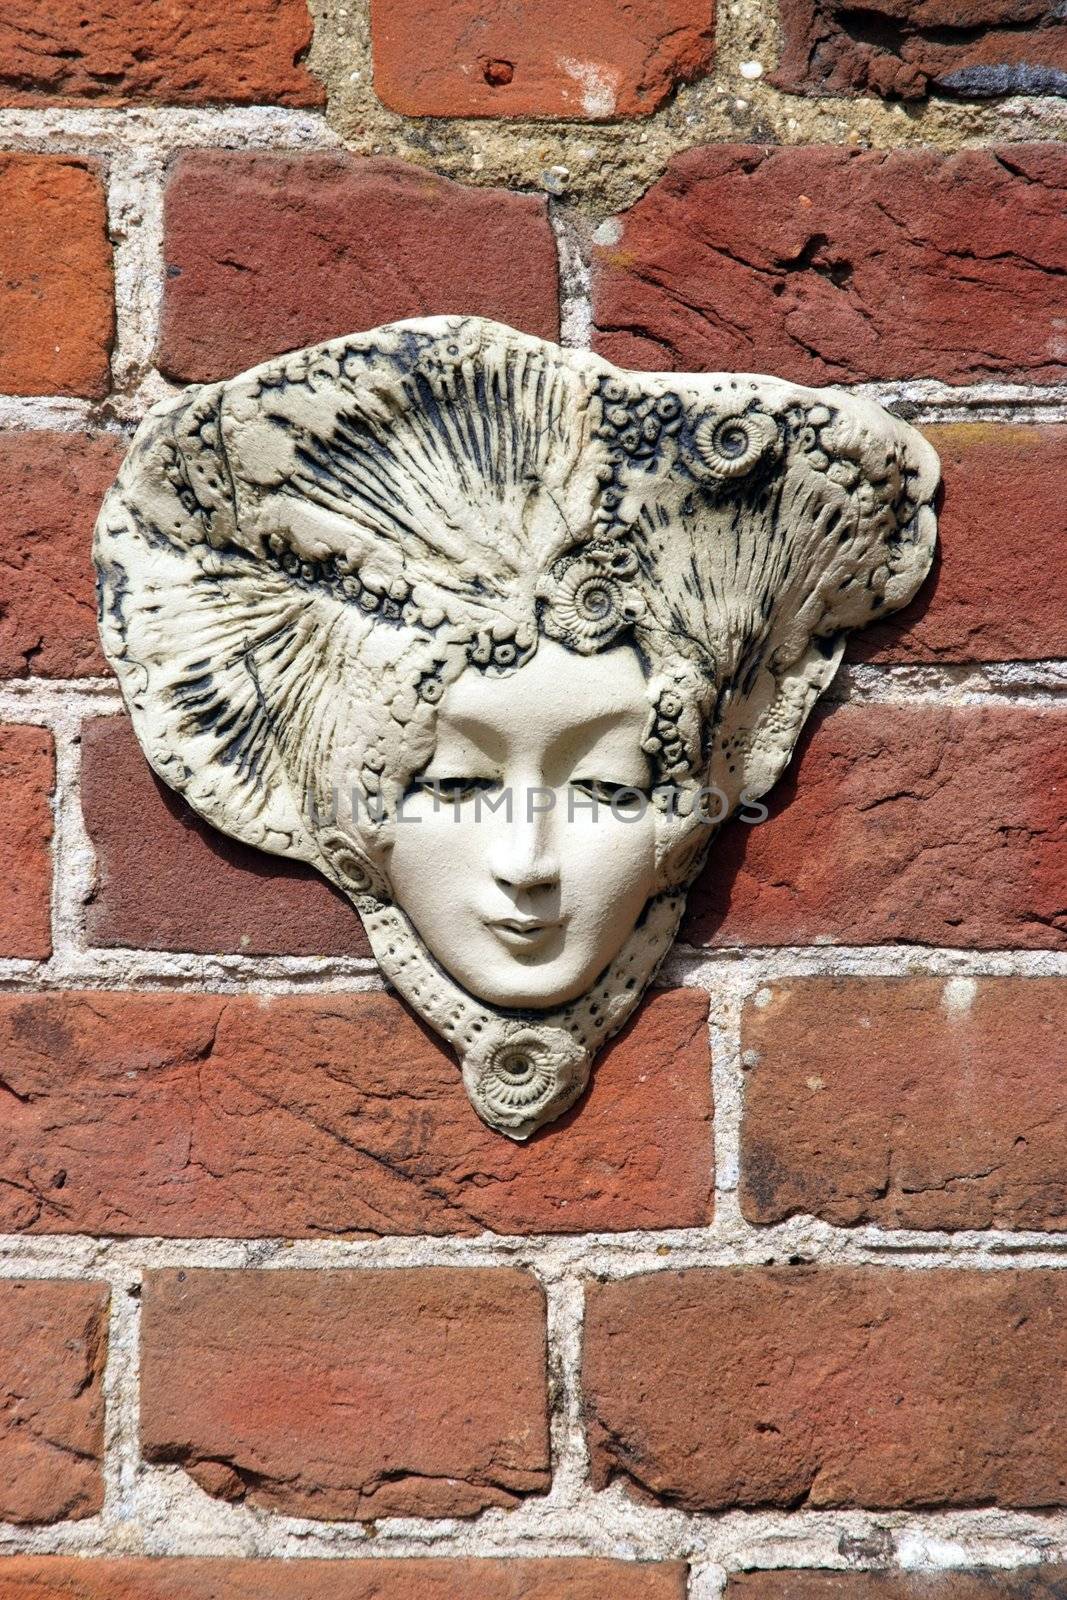 Decorative plant holder on a brick wall